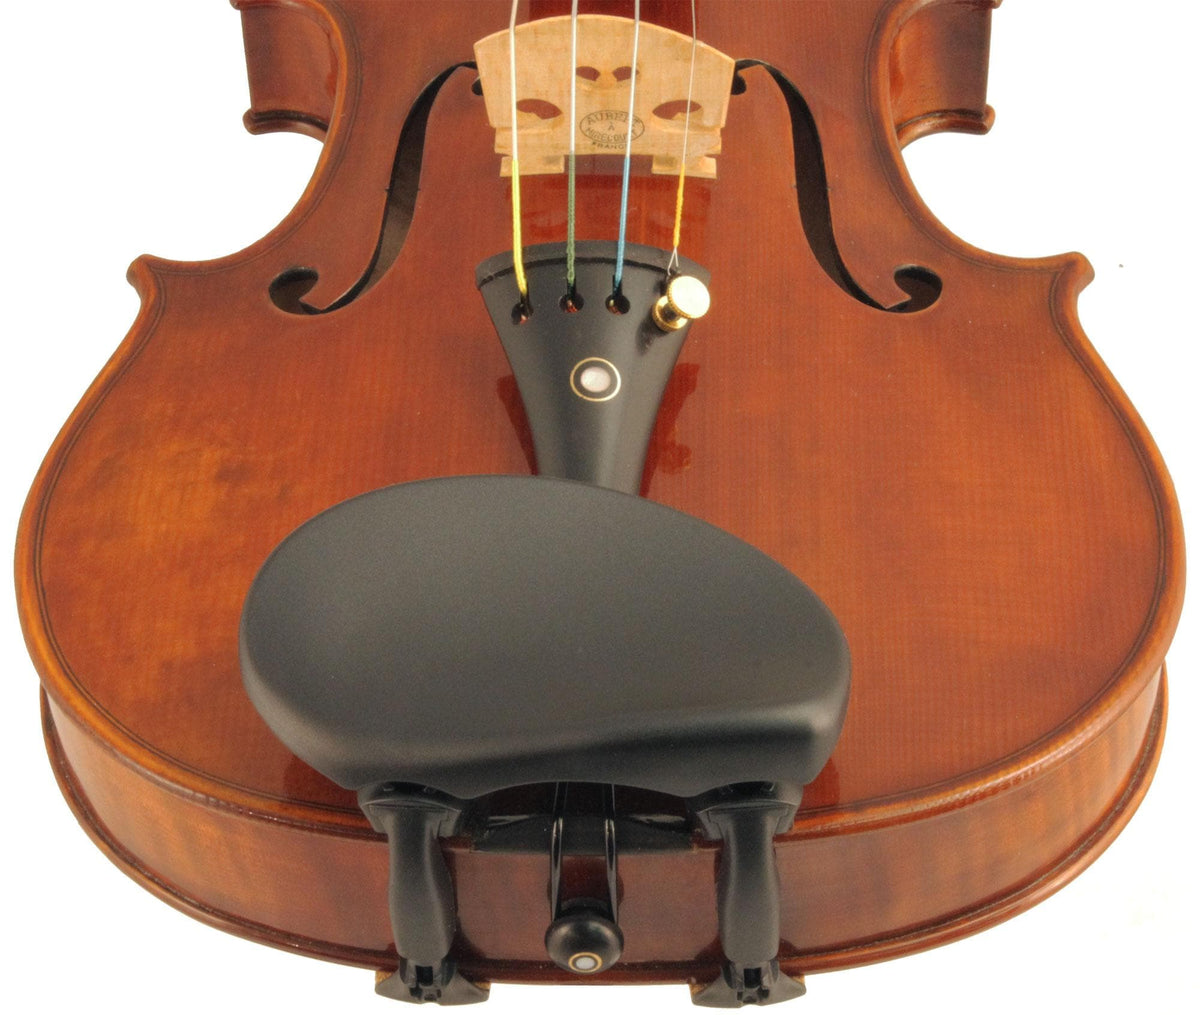 Wittner Hypoallergenic Plastic Violin Chinrest - Center Mounted